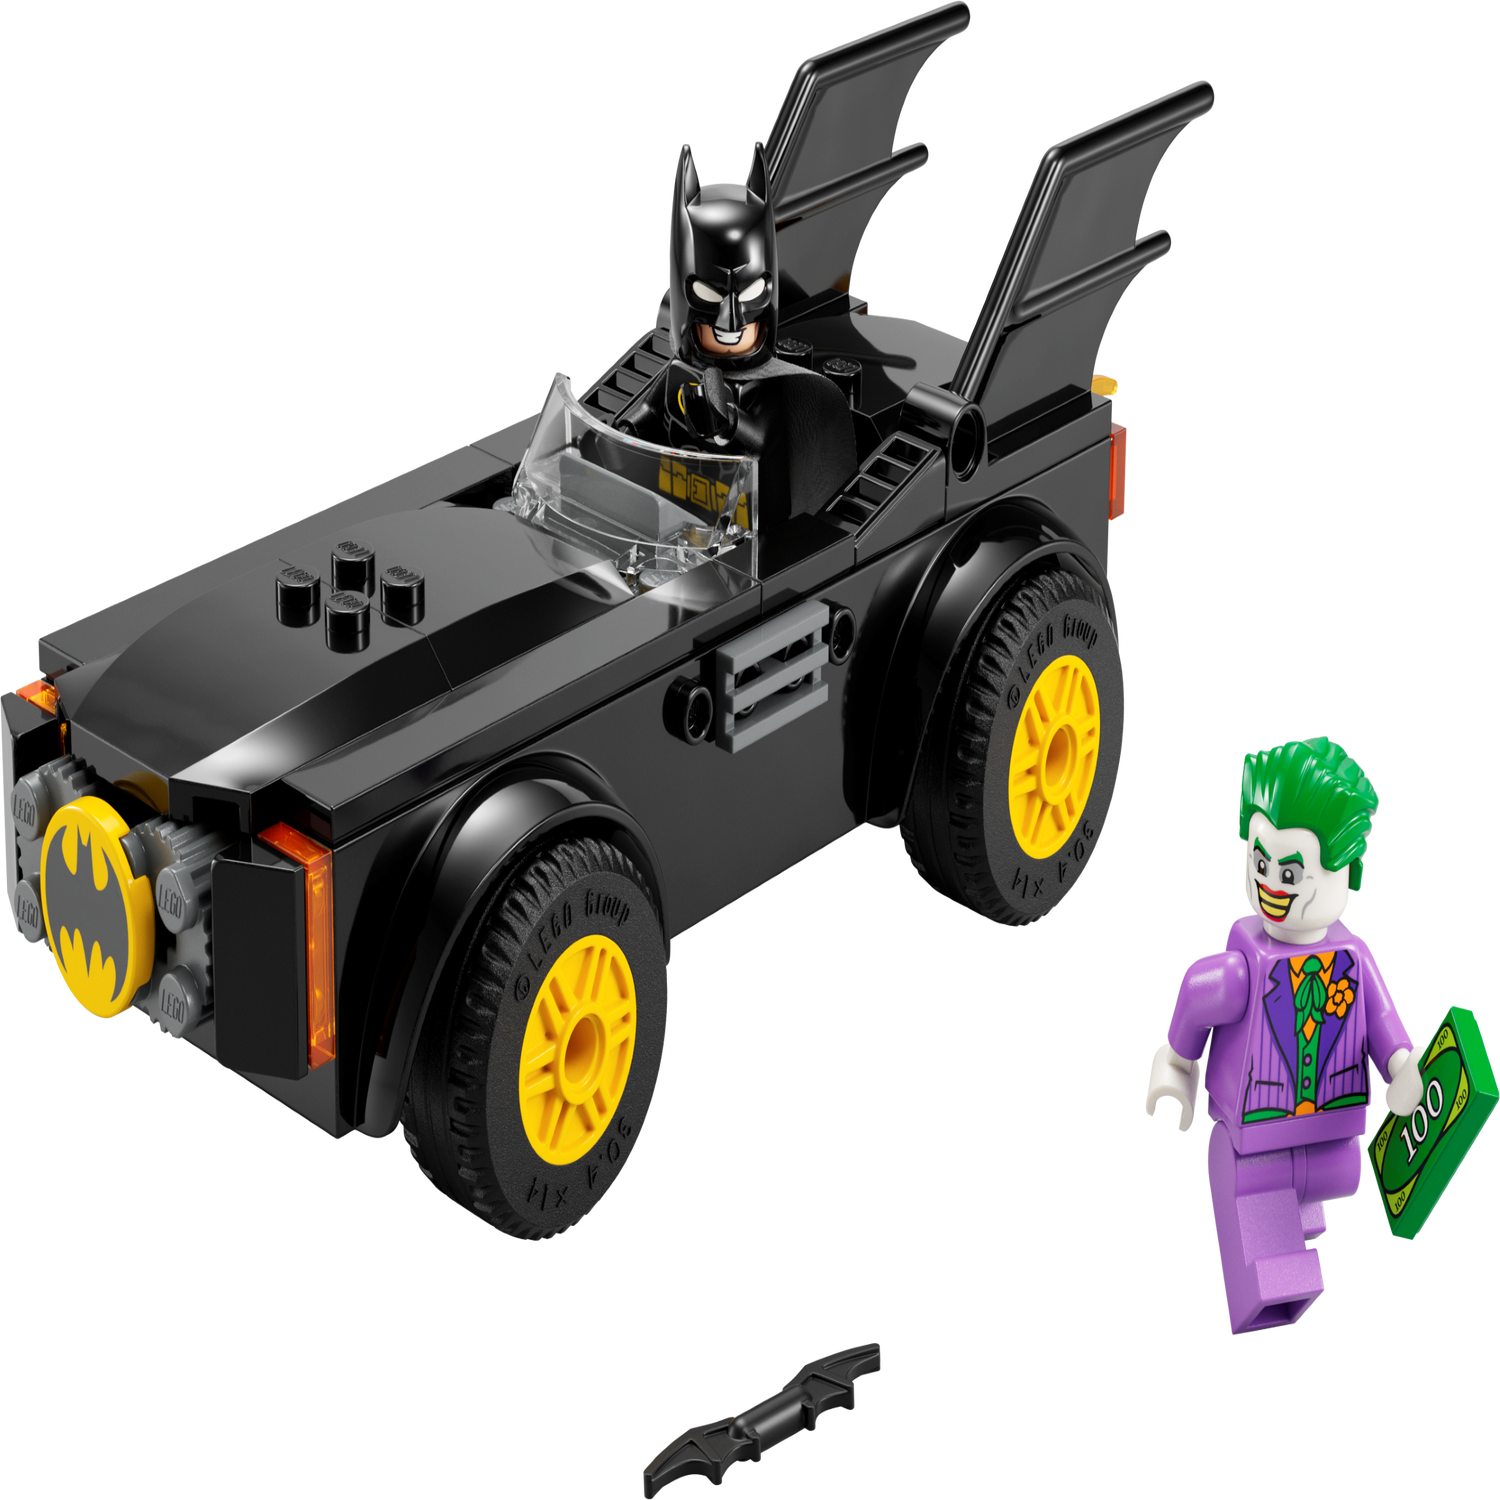 Cool Stuff: The Batman LEGO Sets Let You Build The New Batmobile